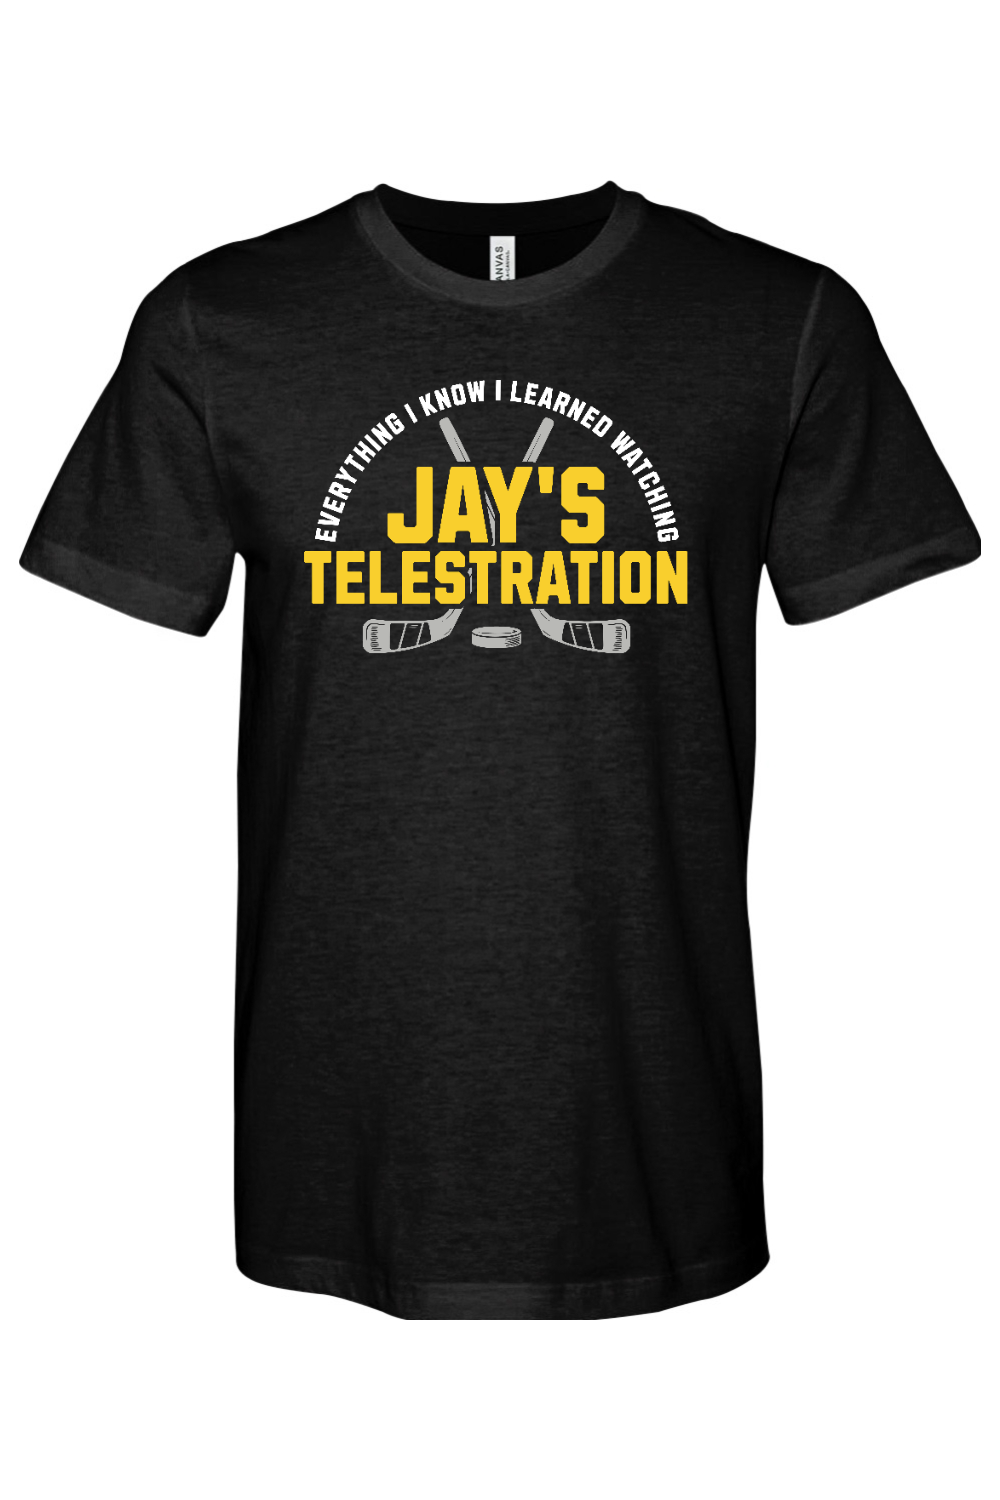 Jay's Telestration - Yinzylvania